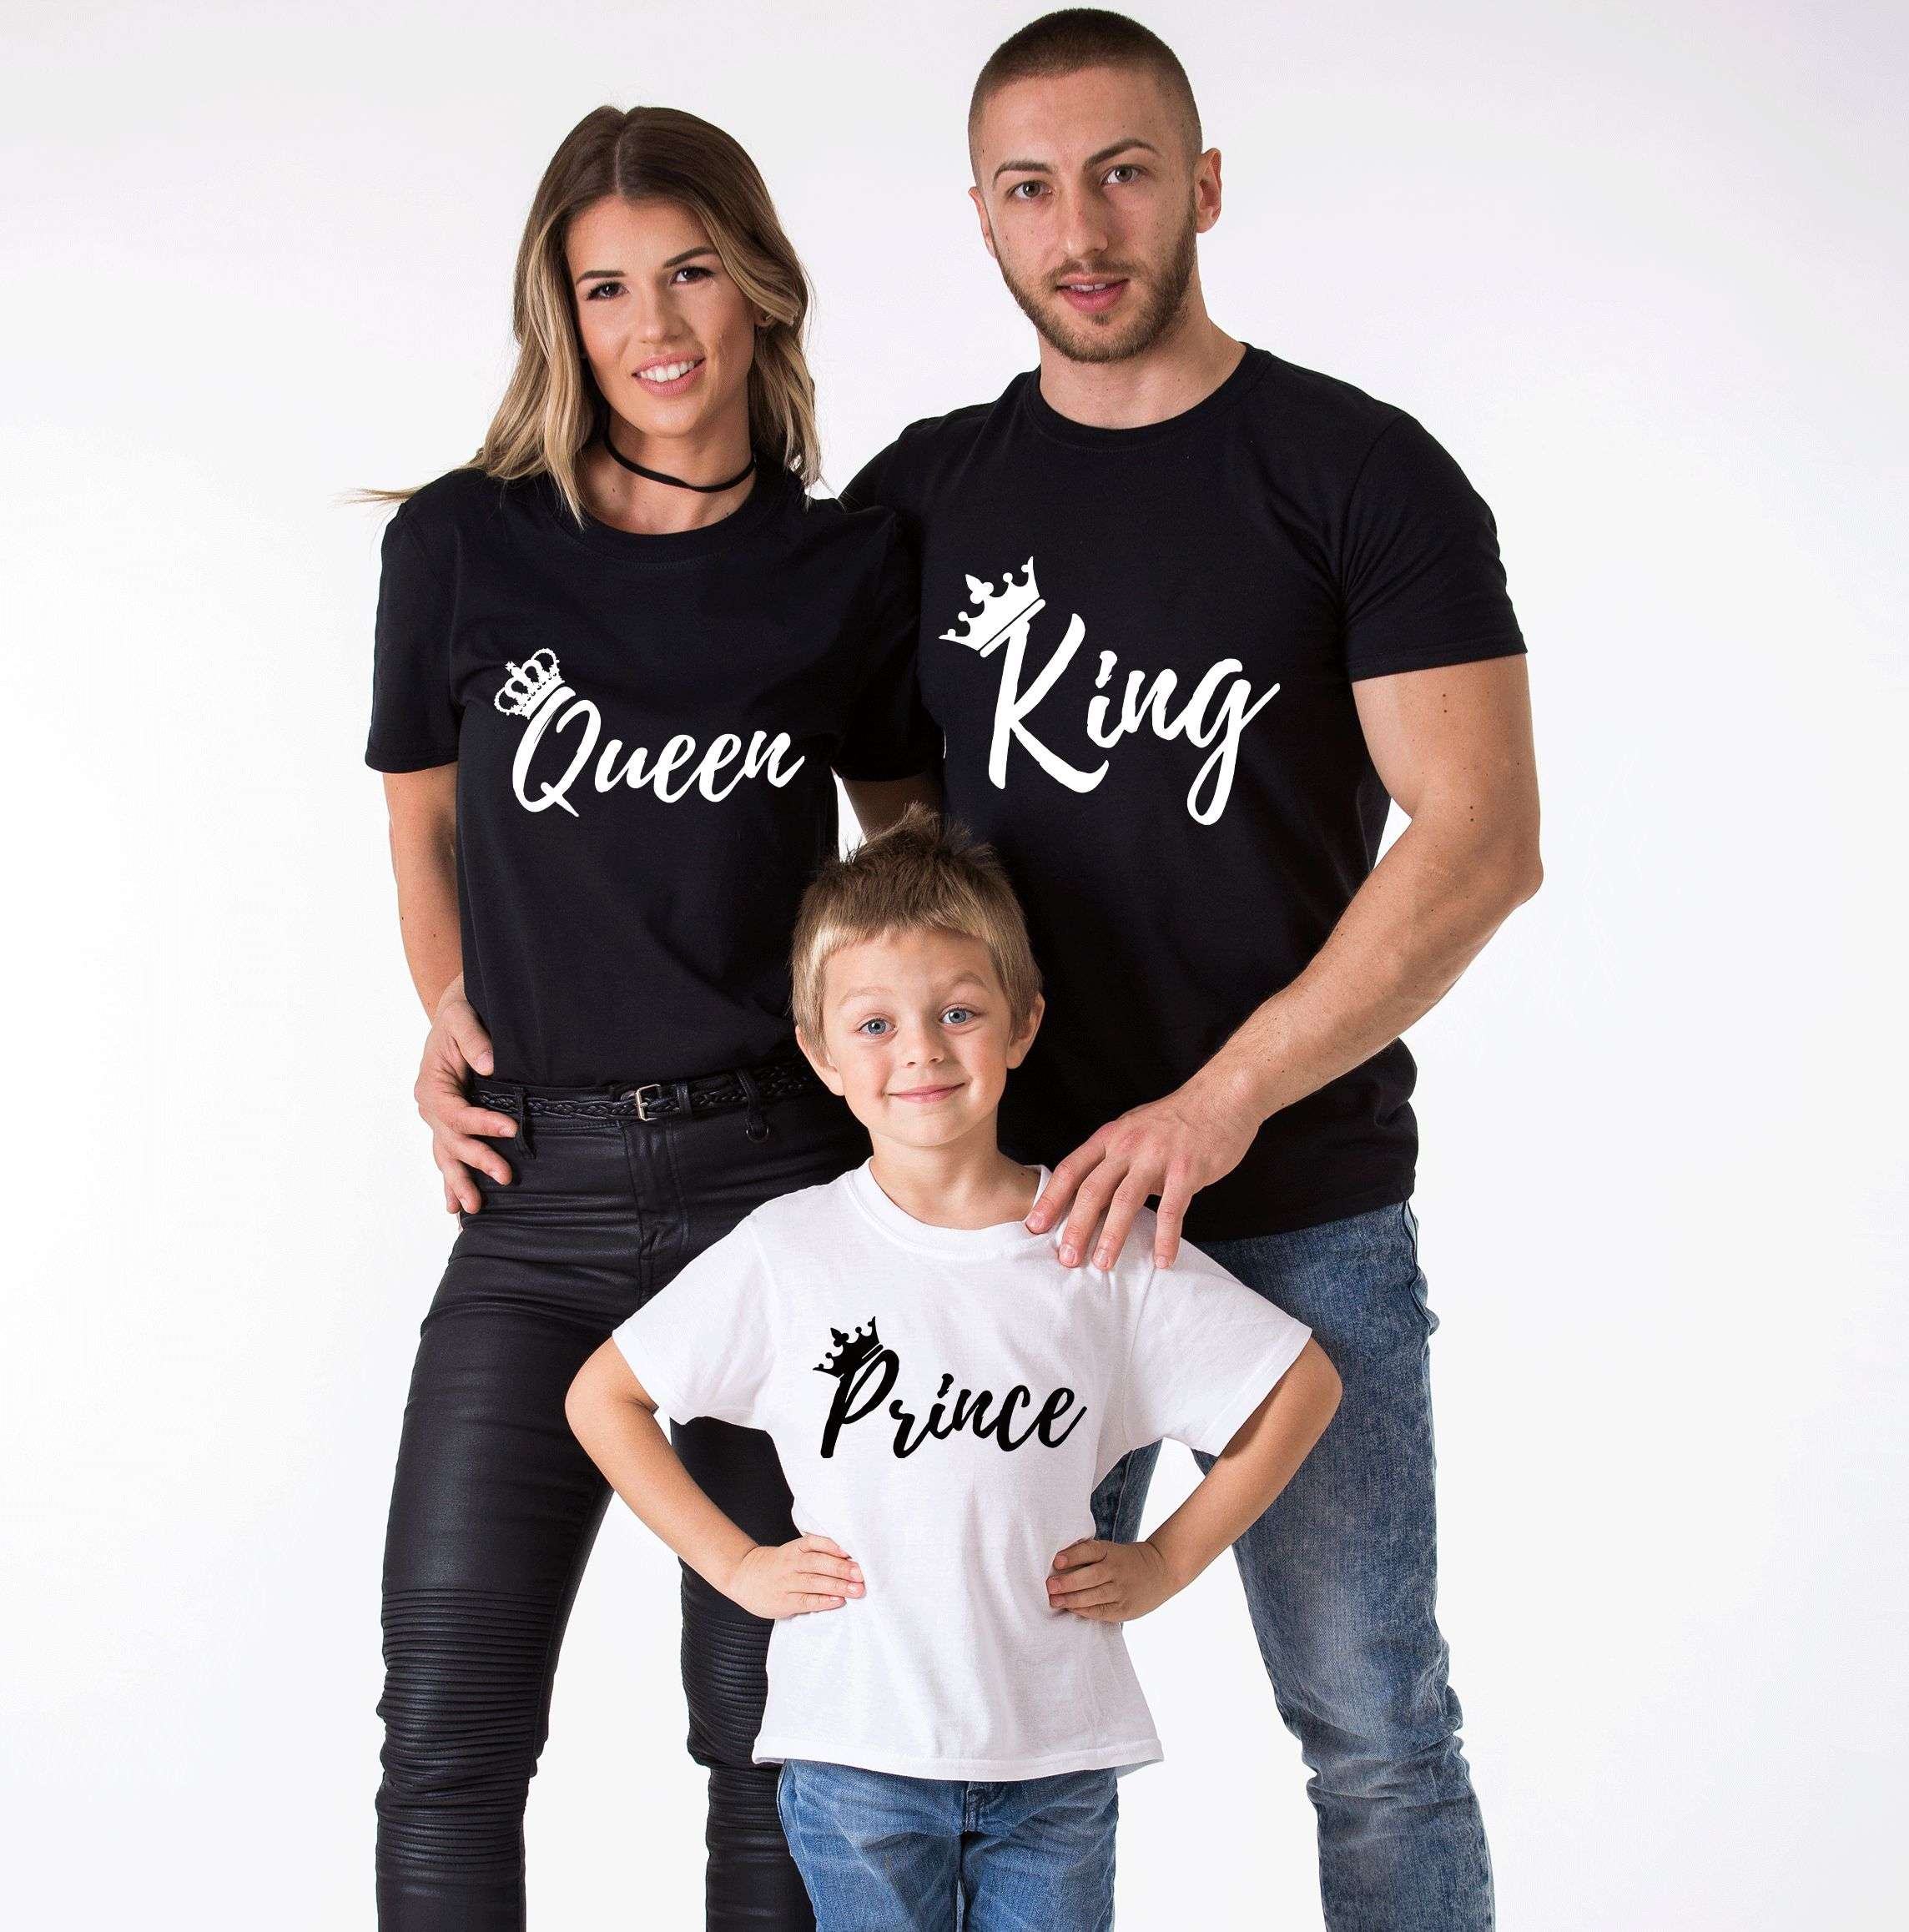 King Queen Prince Princess Family Matching Shirts